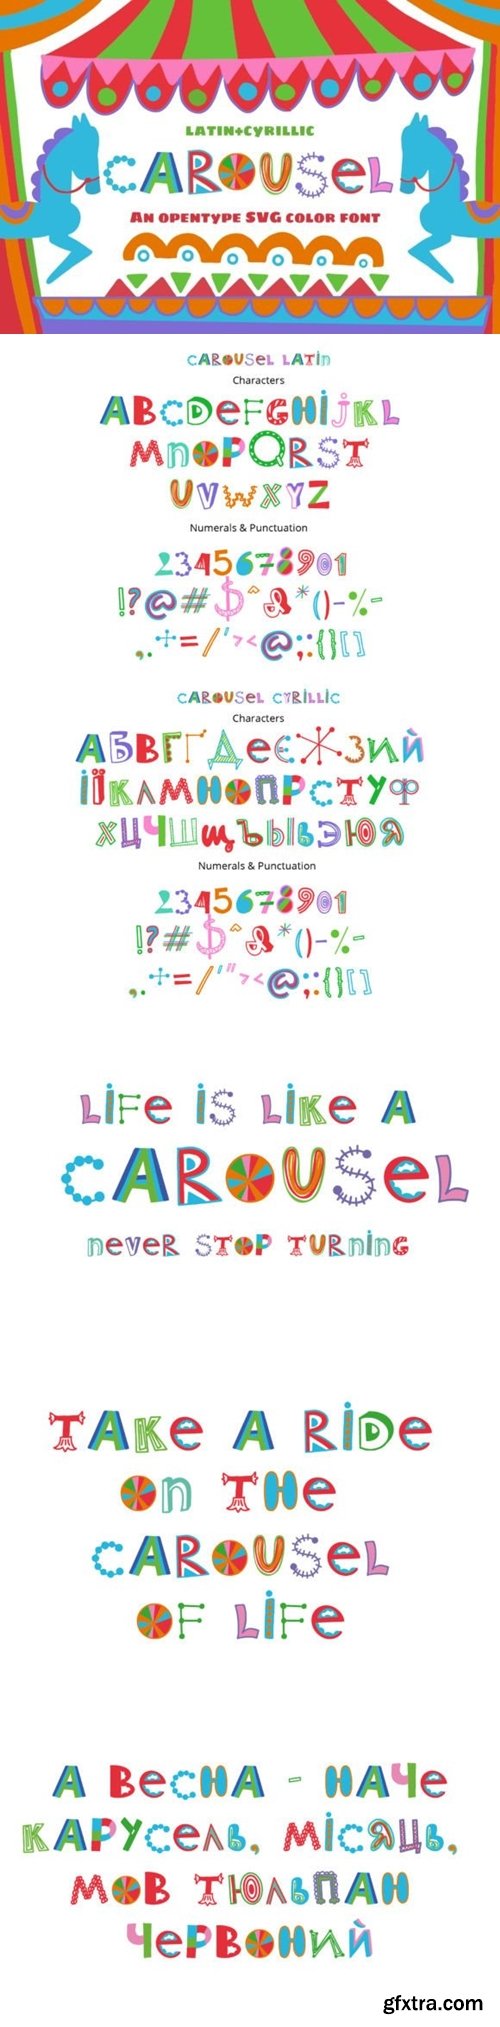 Carousel Font